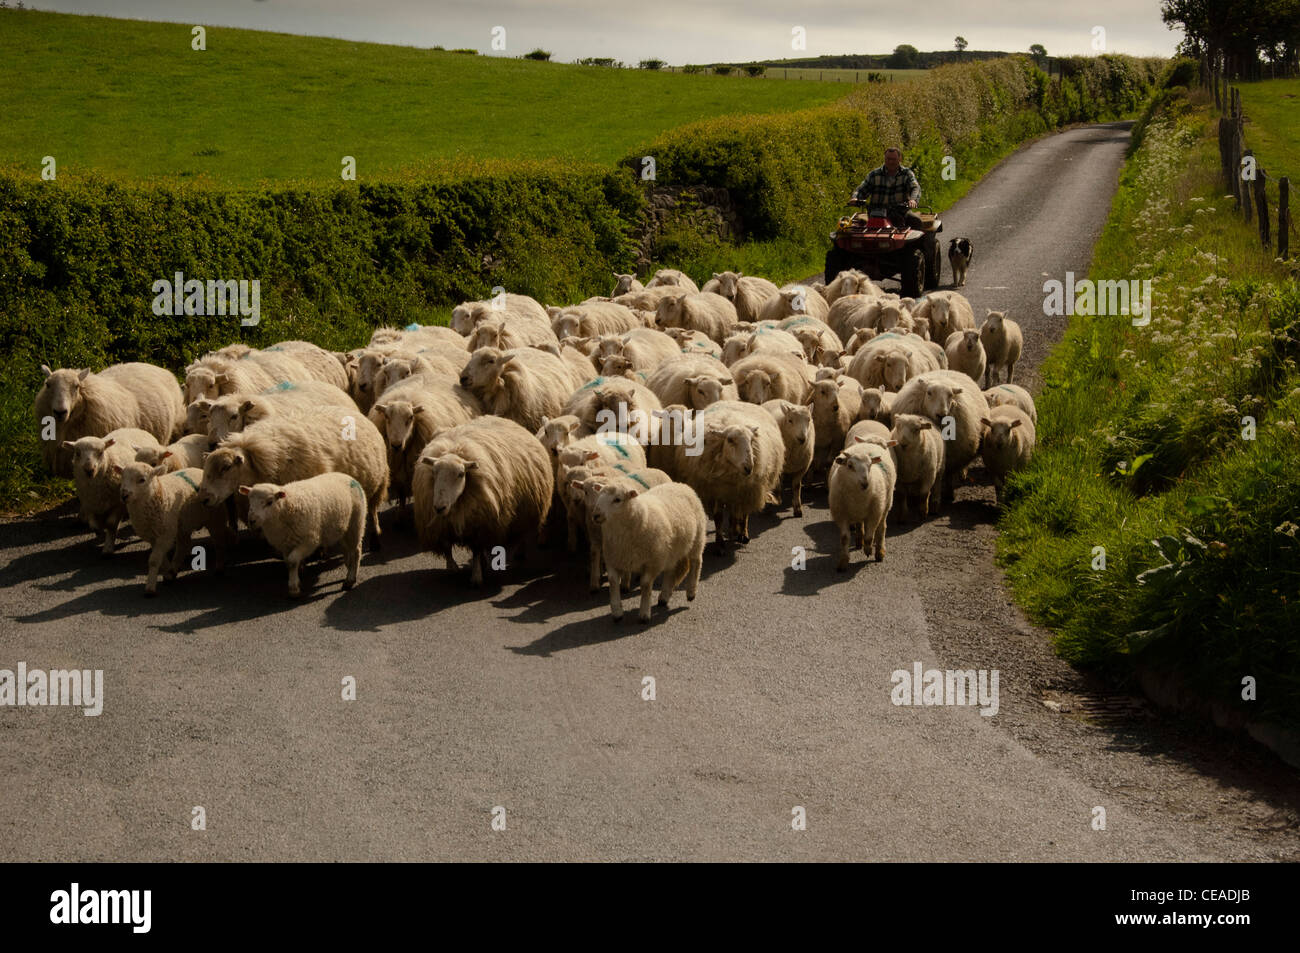 Farmer on quadbike herding sheep along country road Stock Photo